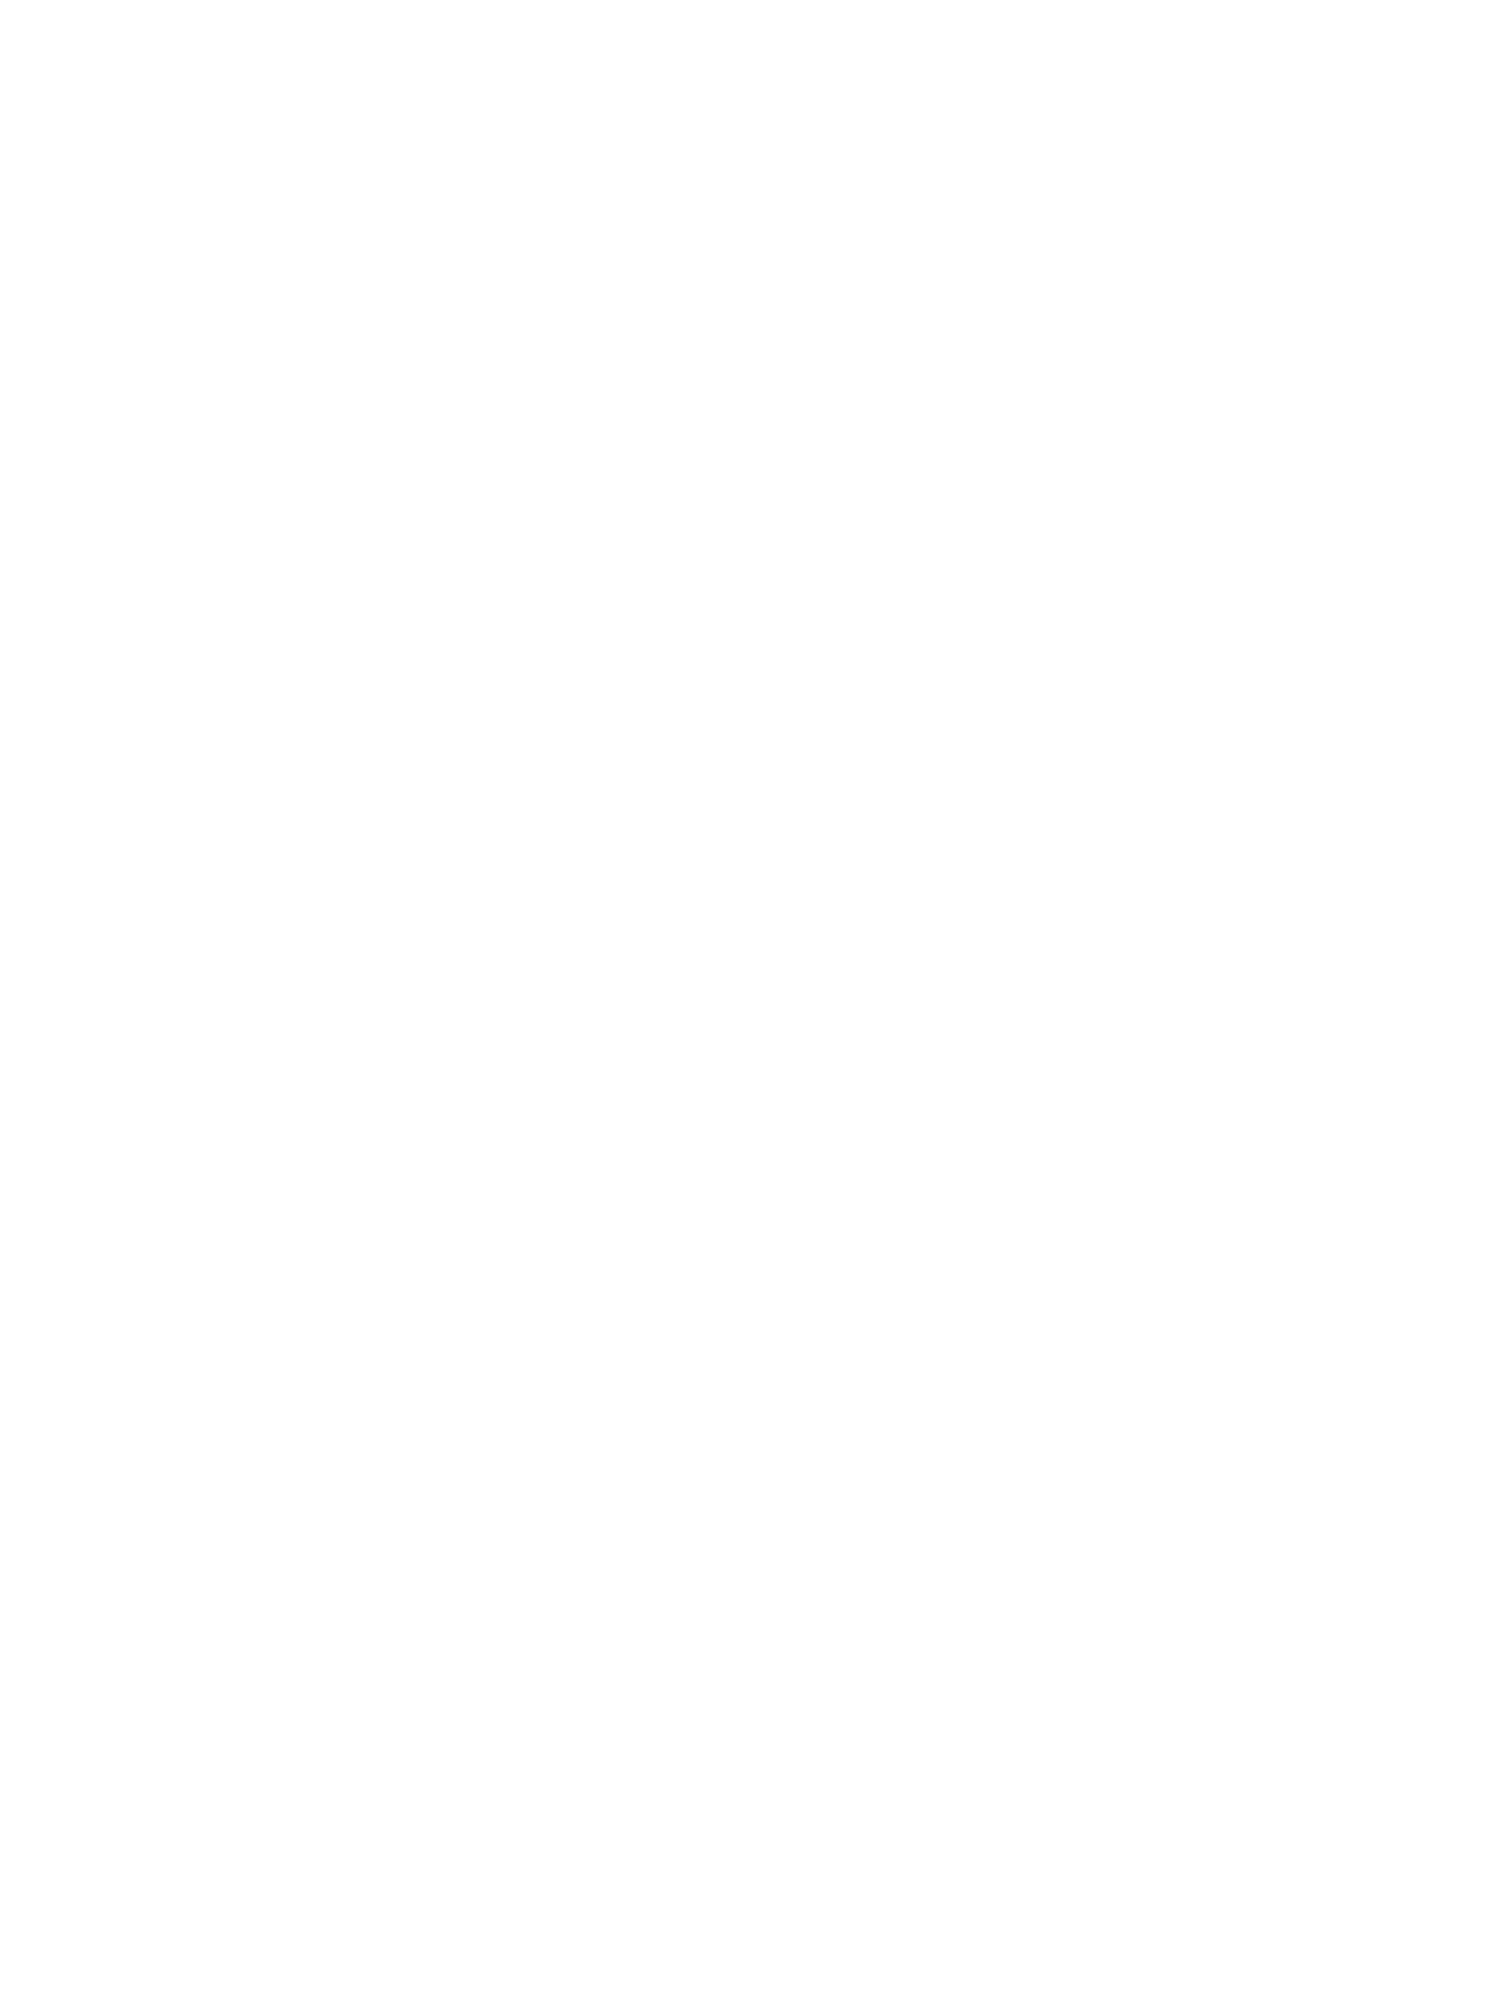 Grace Church Catterick